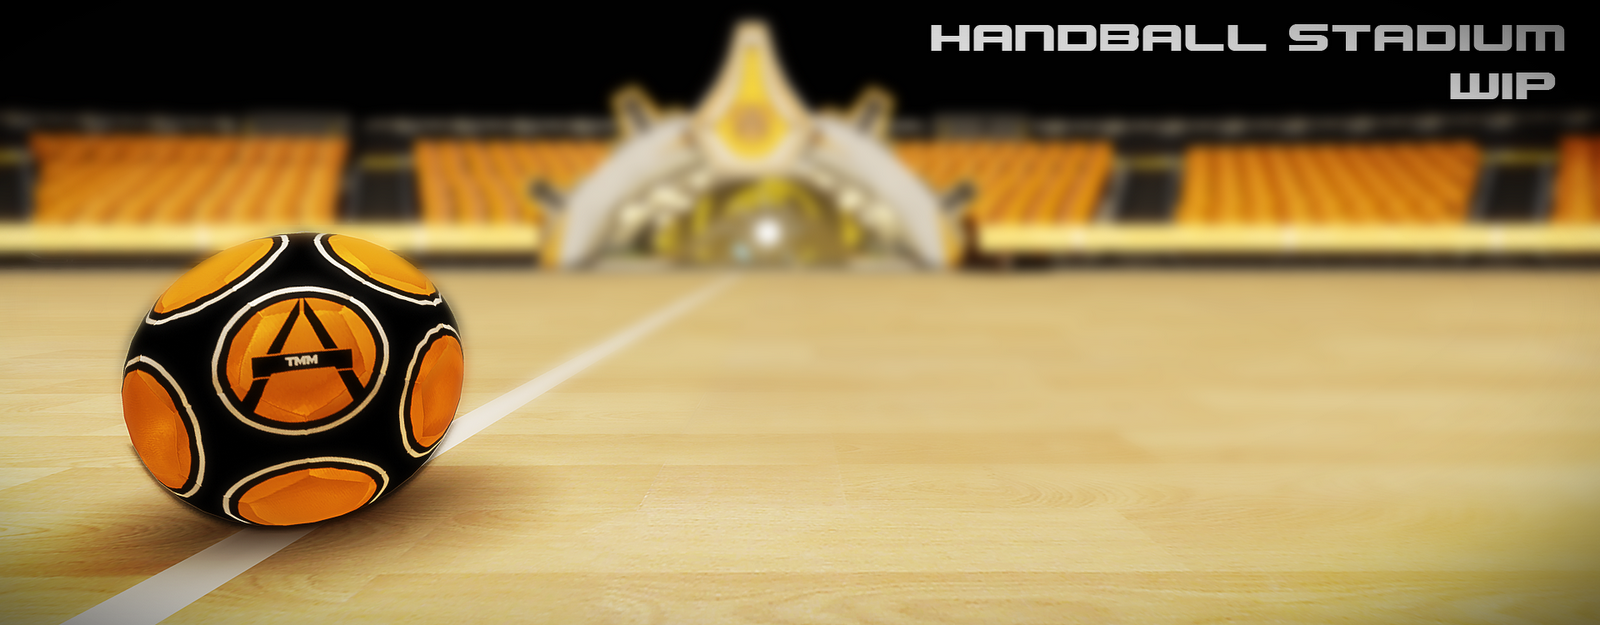 handball_001.png